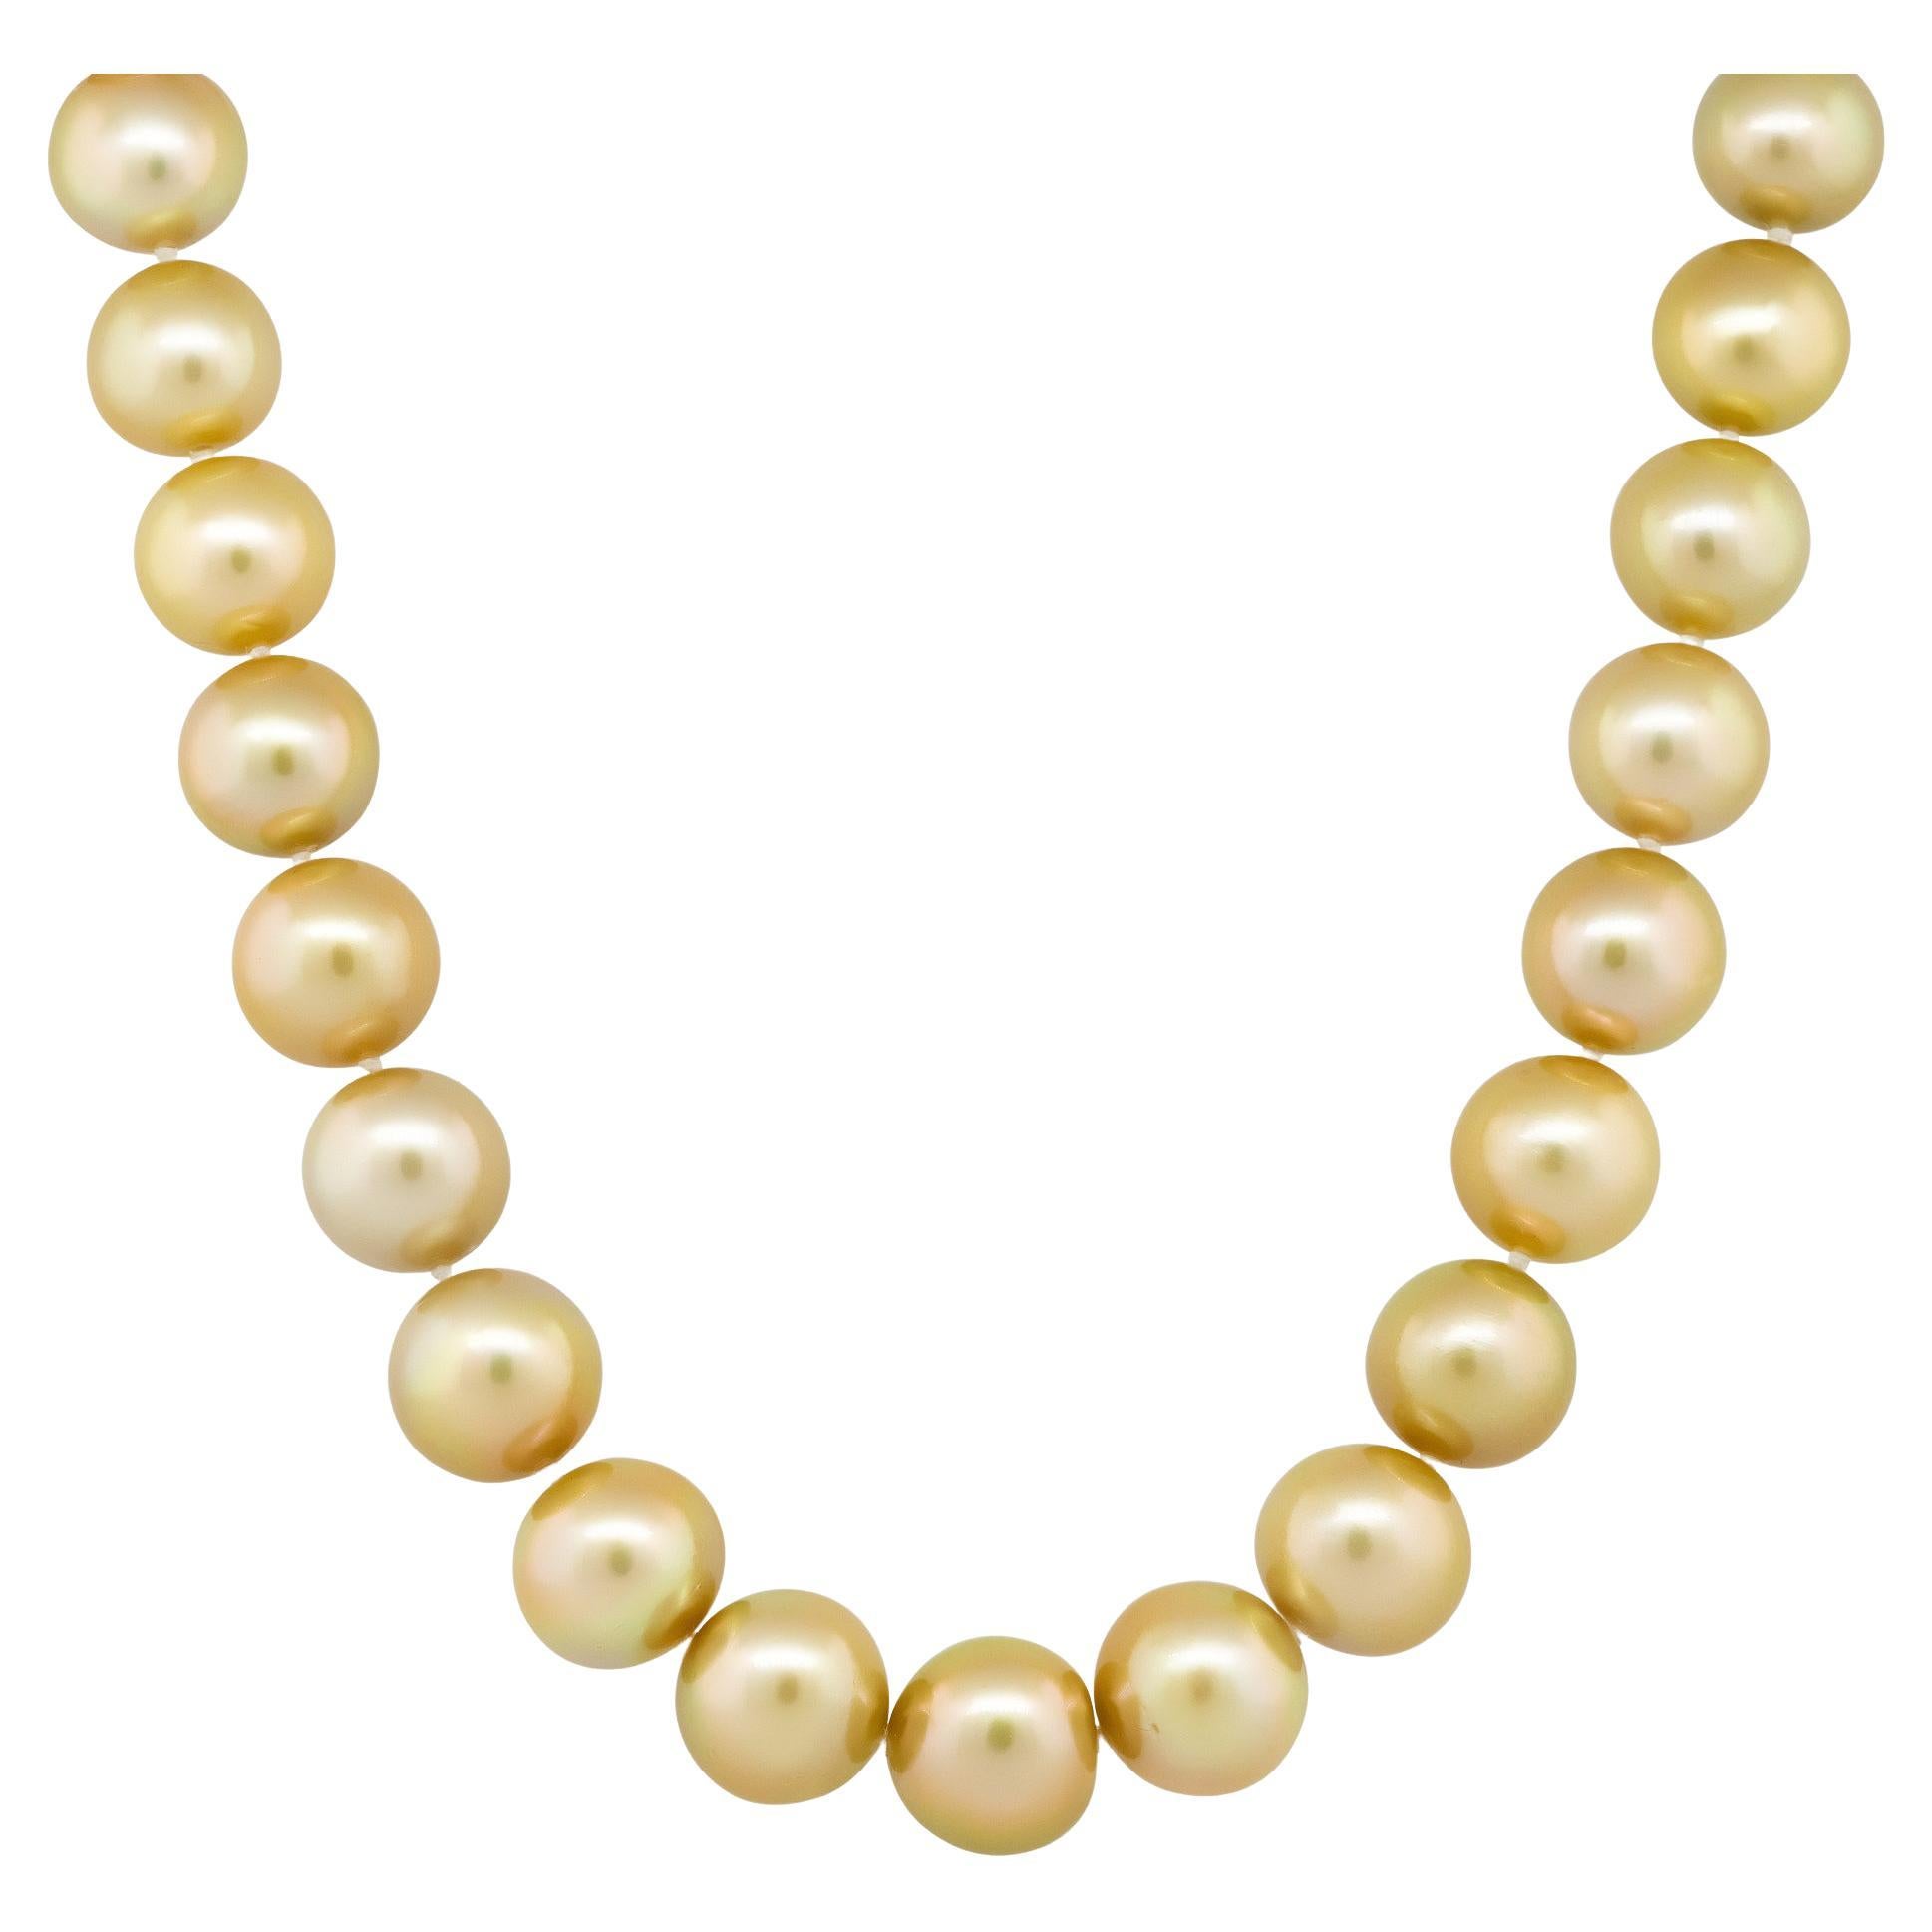 0.15 Carat Diamond South Sea Pearl Necklace 18 Karat in Stock